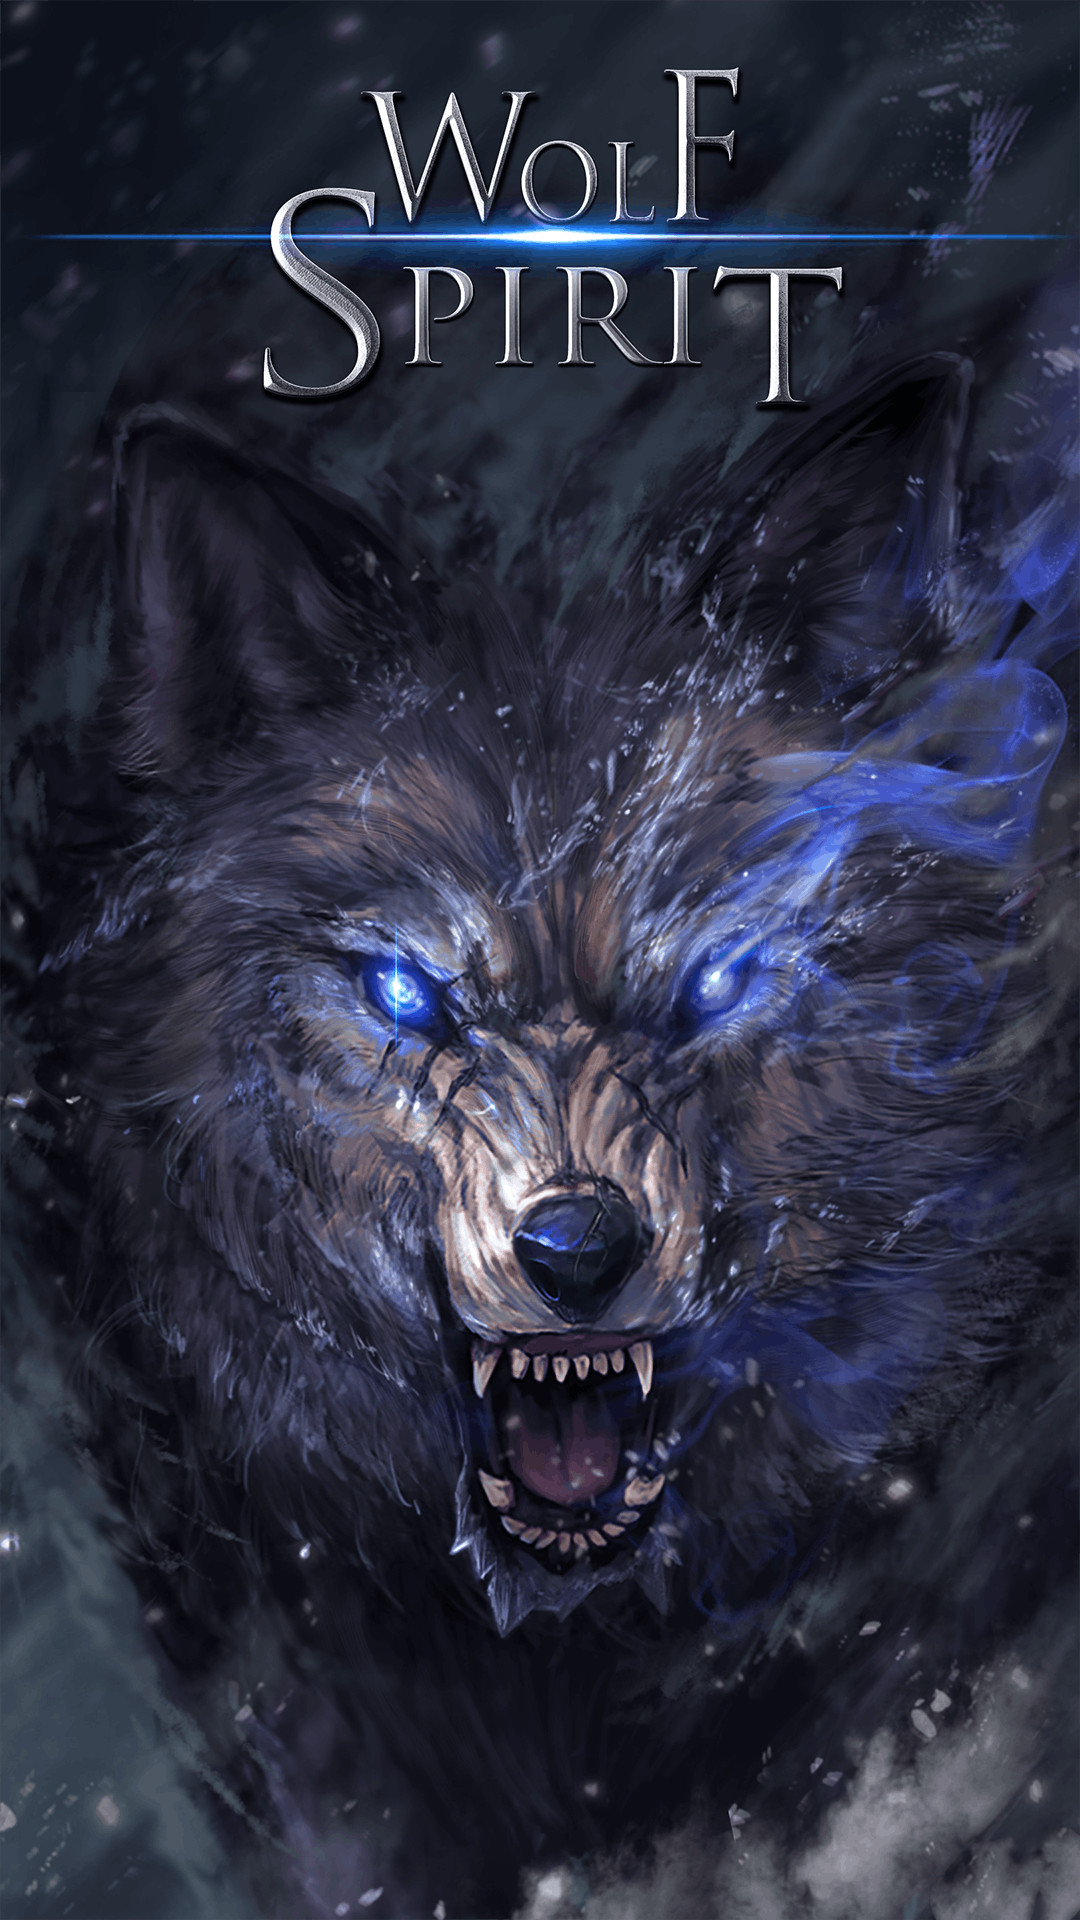 1080x1920 Wolf spirit live wallpaper